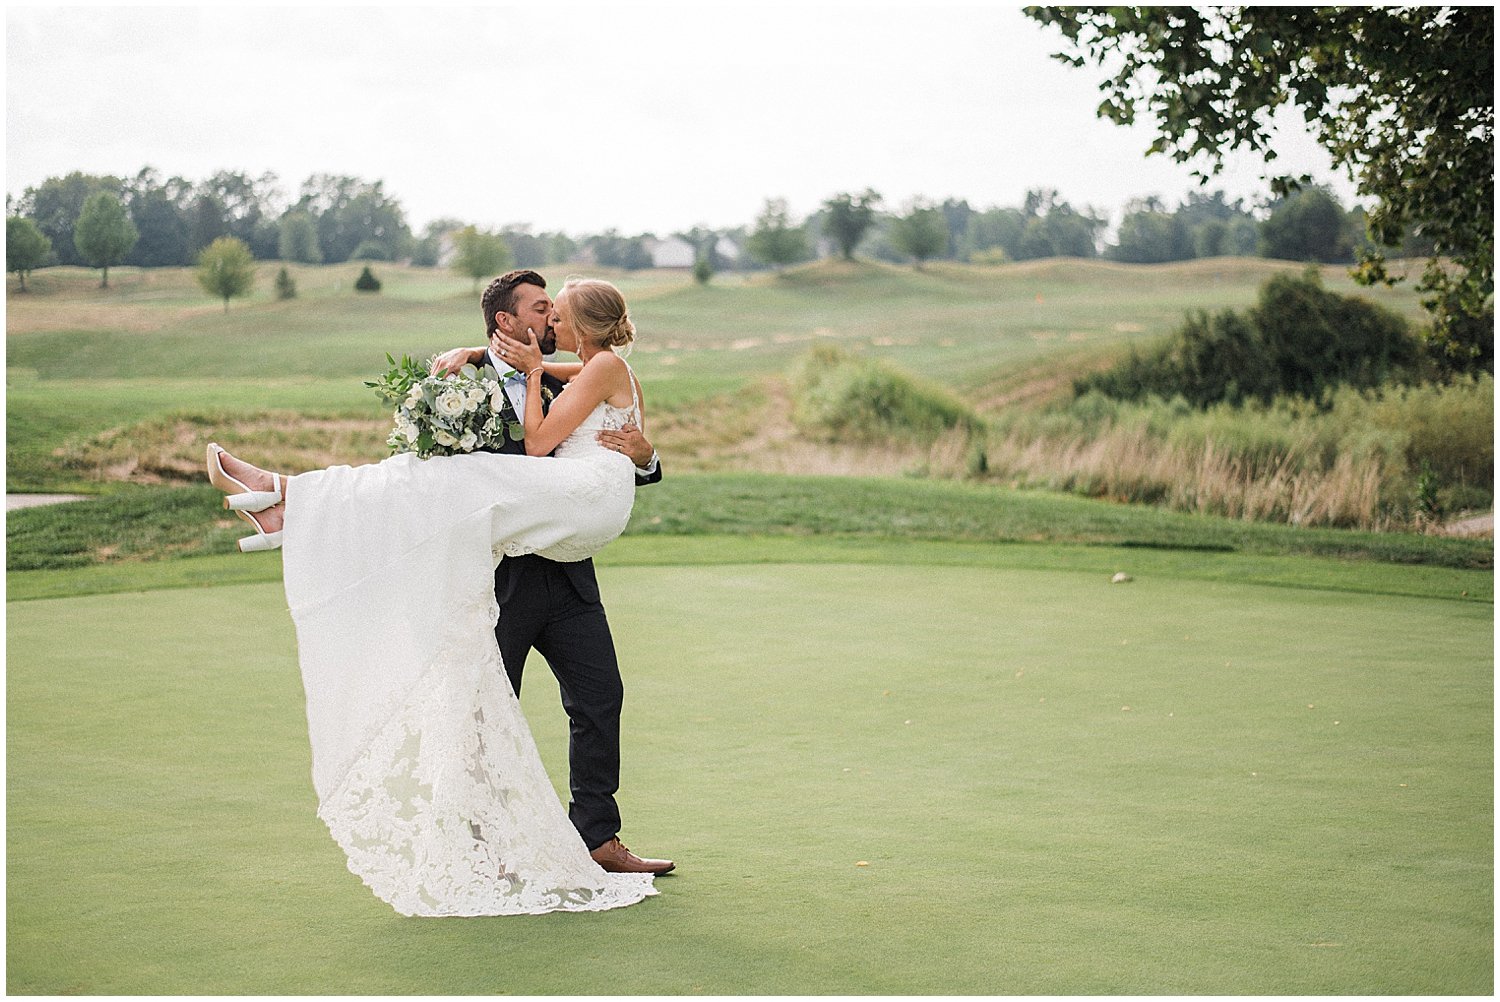 Oasis Golf Club| Cincinnati, Ohio Wedding